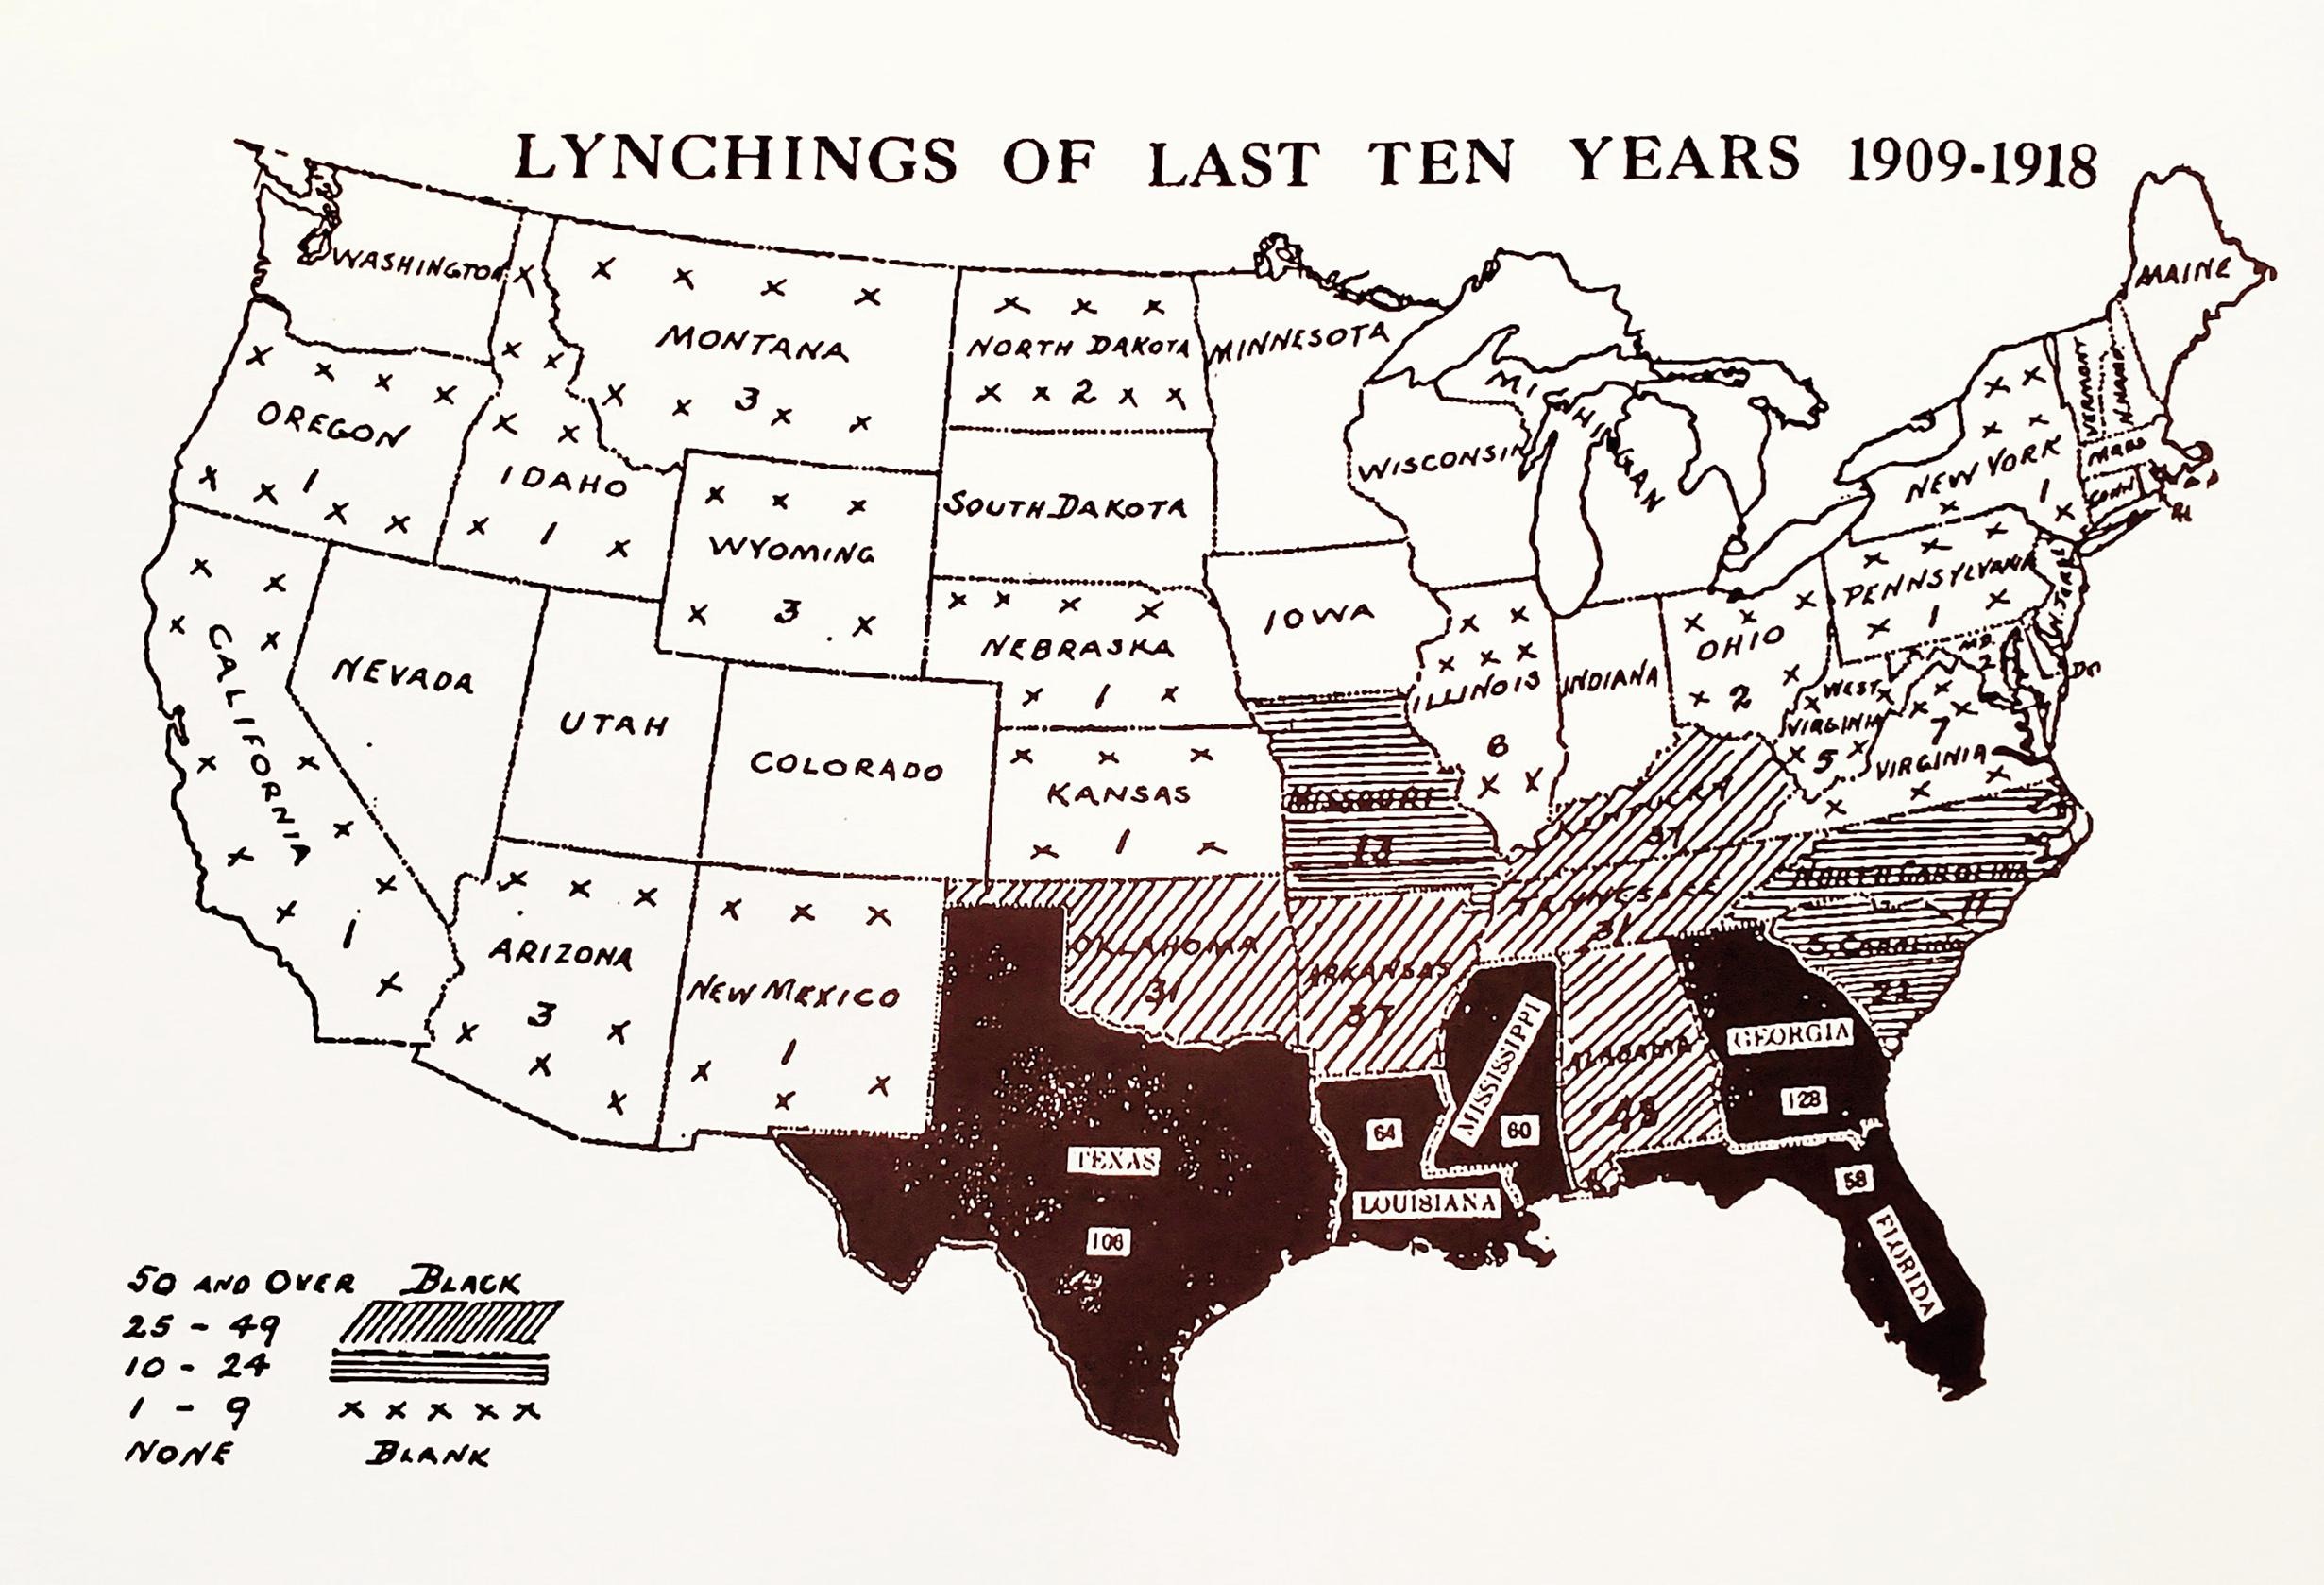 "Lynchings in the last 10 years: 1909-1918" map